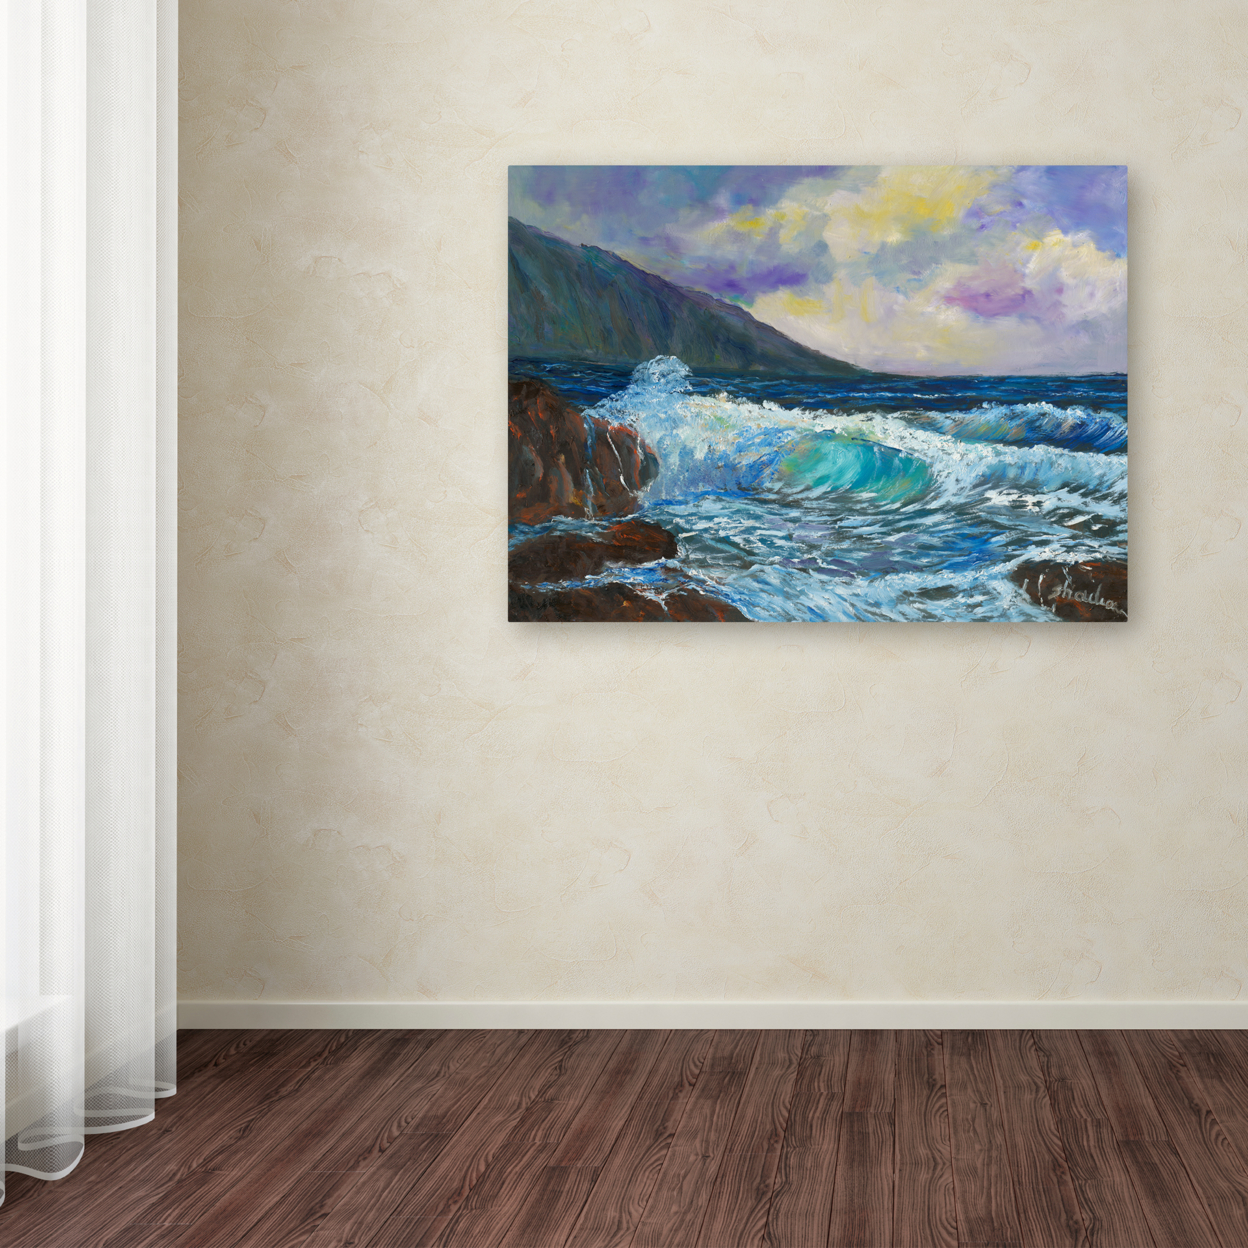 Manor Shadian 'Maui's Enchanting Seas' Canvas Art 18 X 24